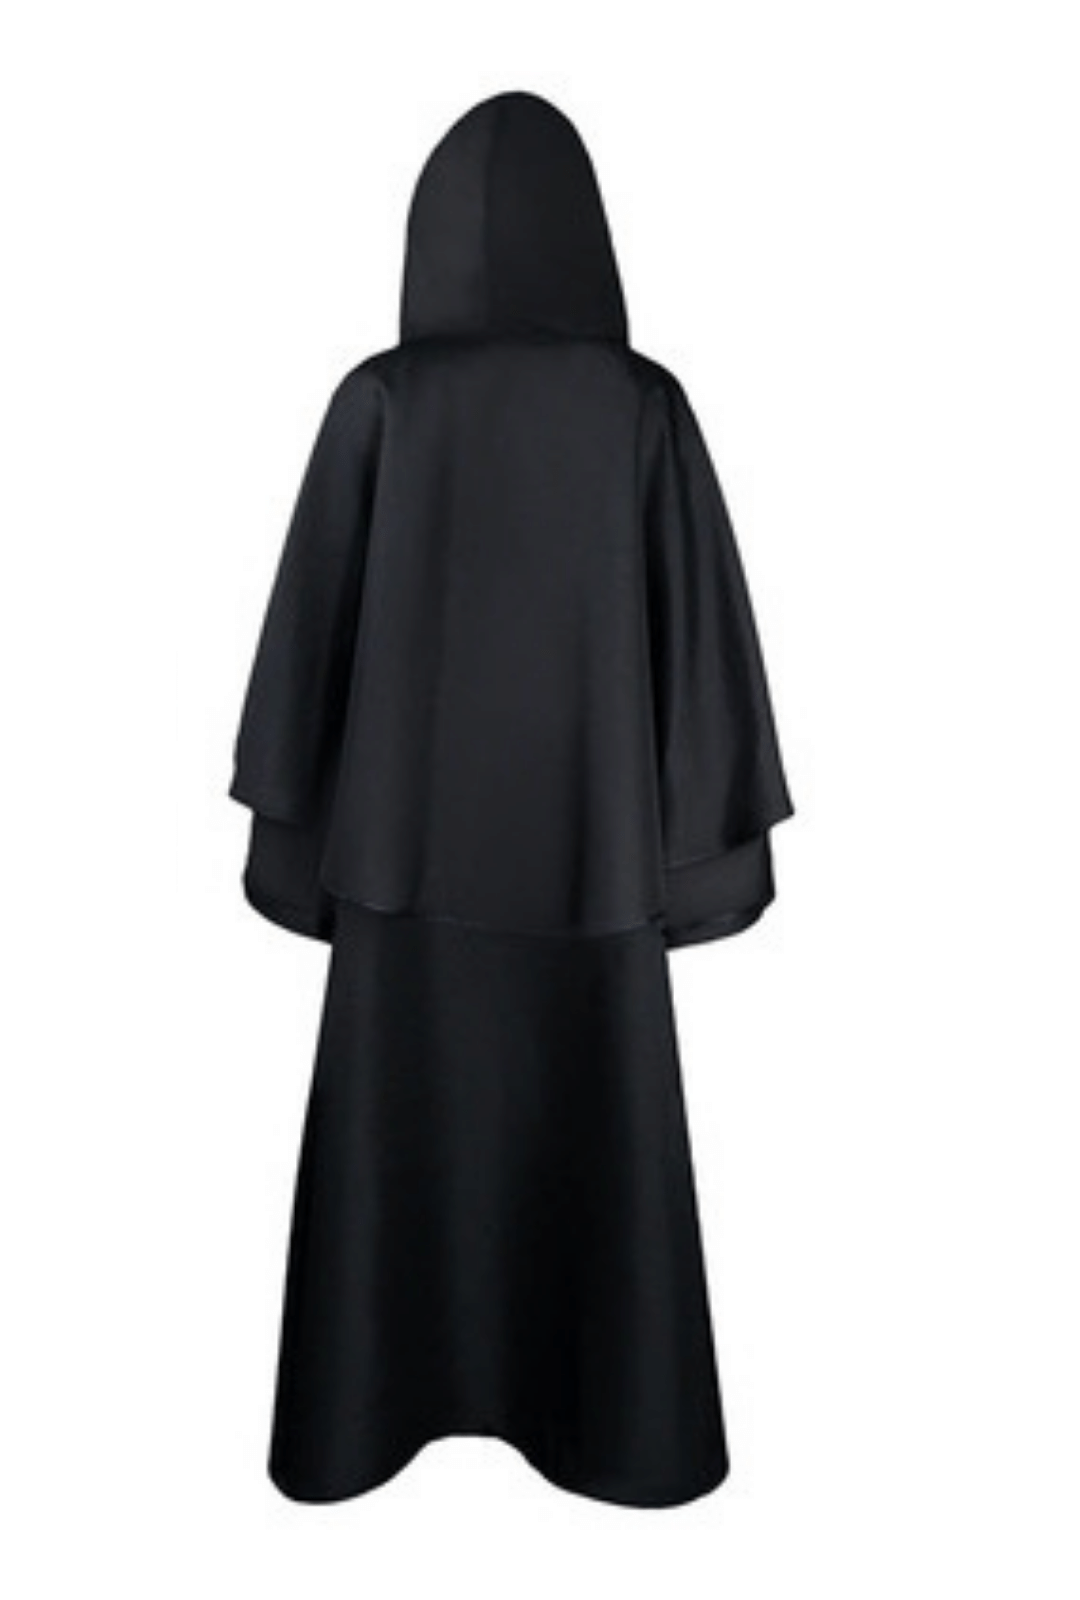 Black Hooded Plague Robe